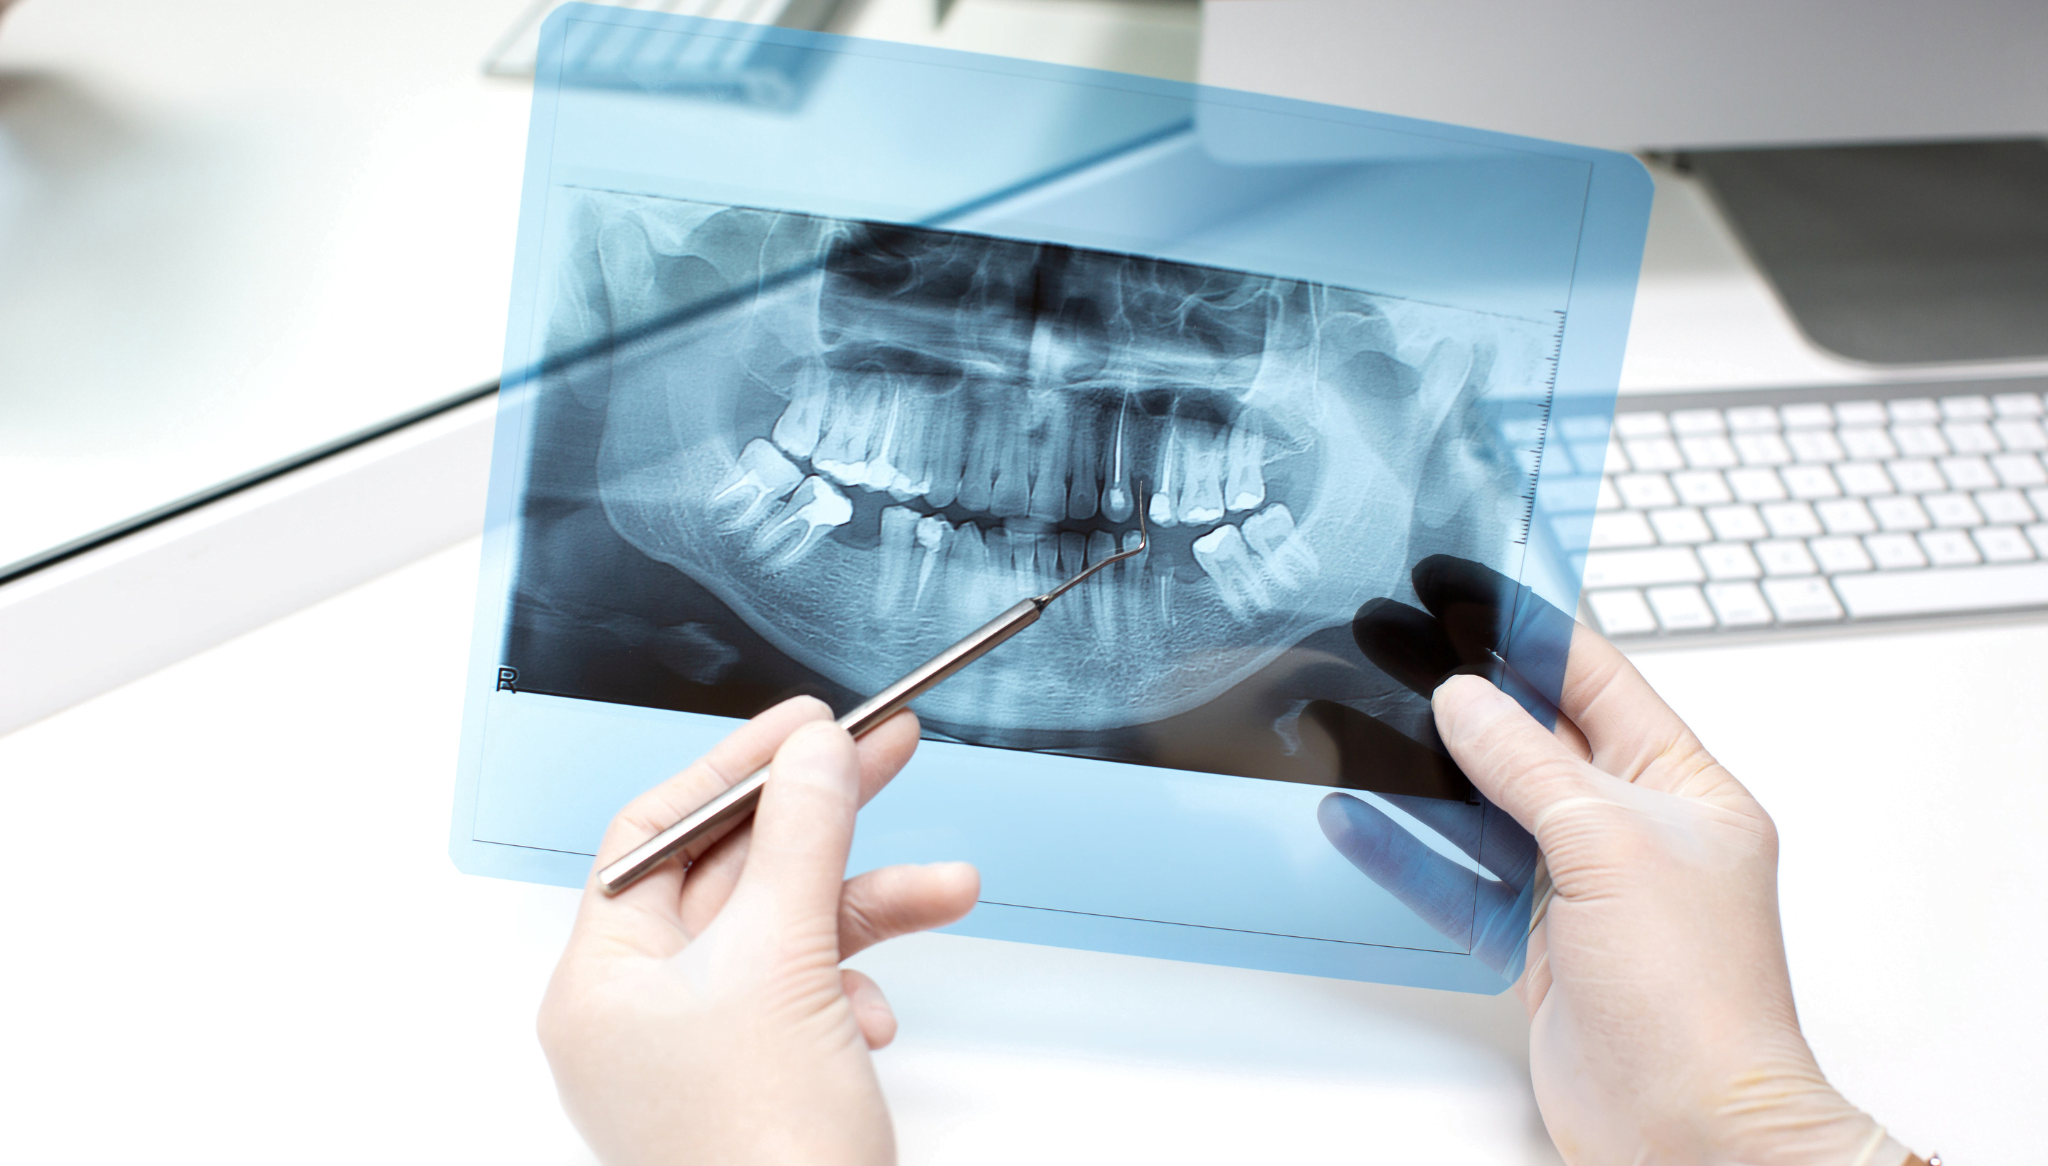 Implantes dentales en Clínica Phi